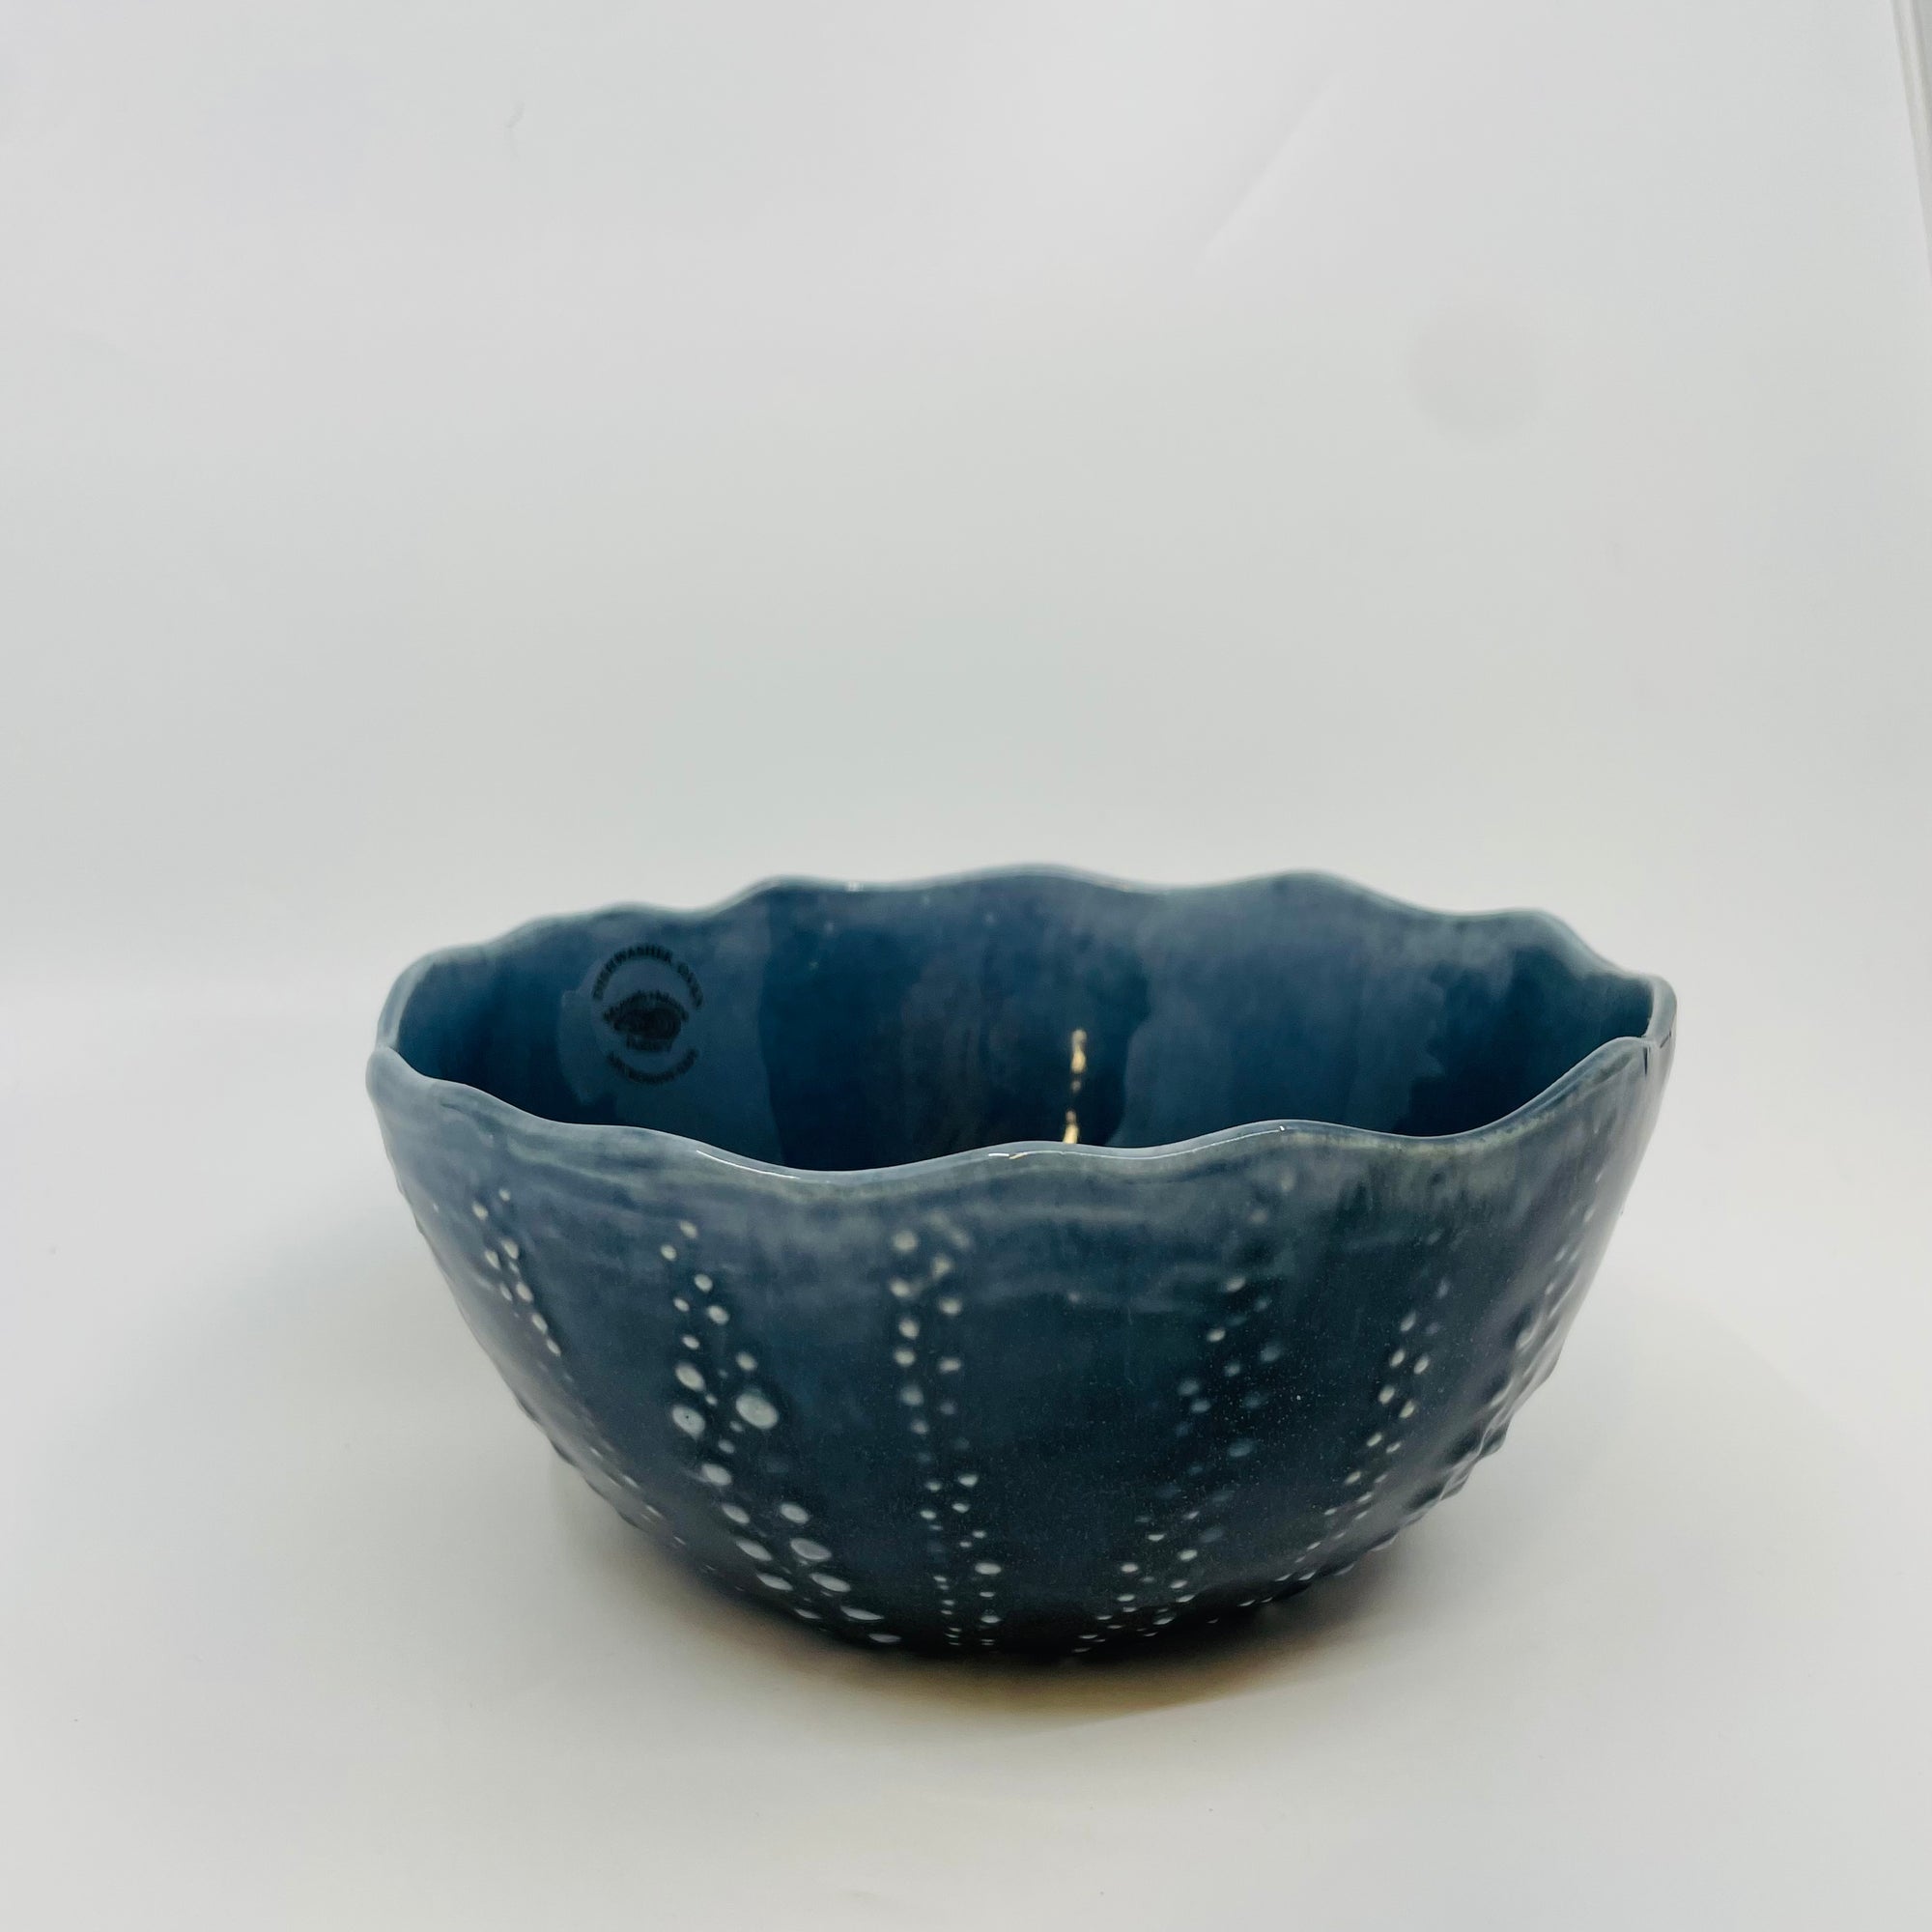 Urchin Bowl Blue - Urchin Bowl Blue -  - House of Himwitsa Native Art Gallery and Gifts